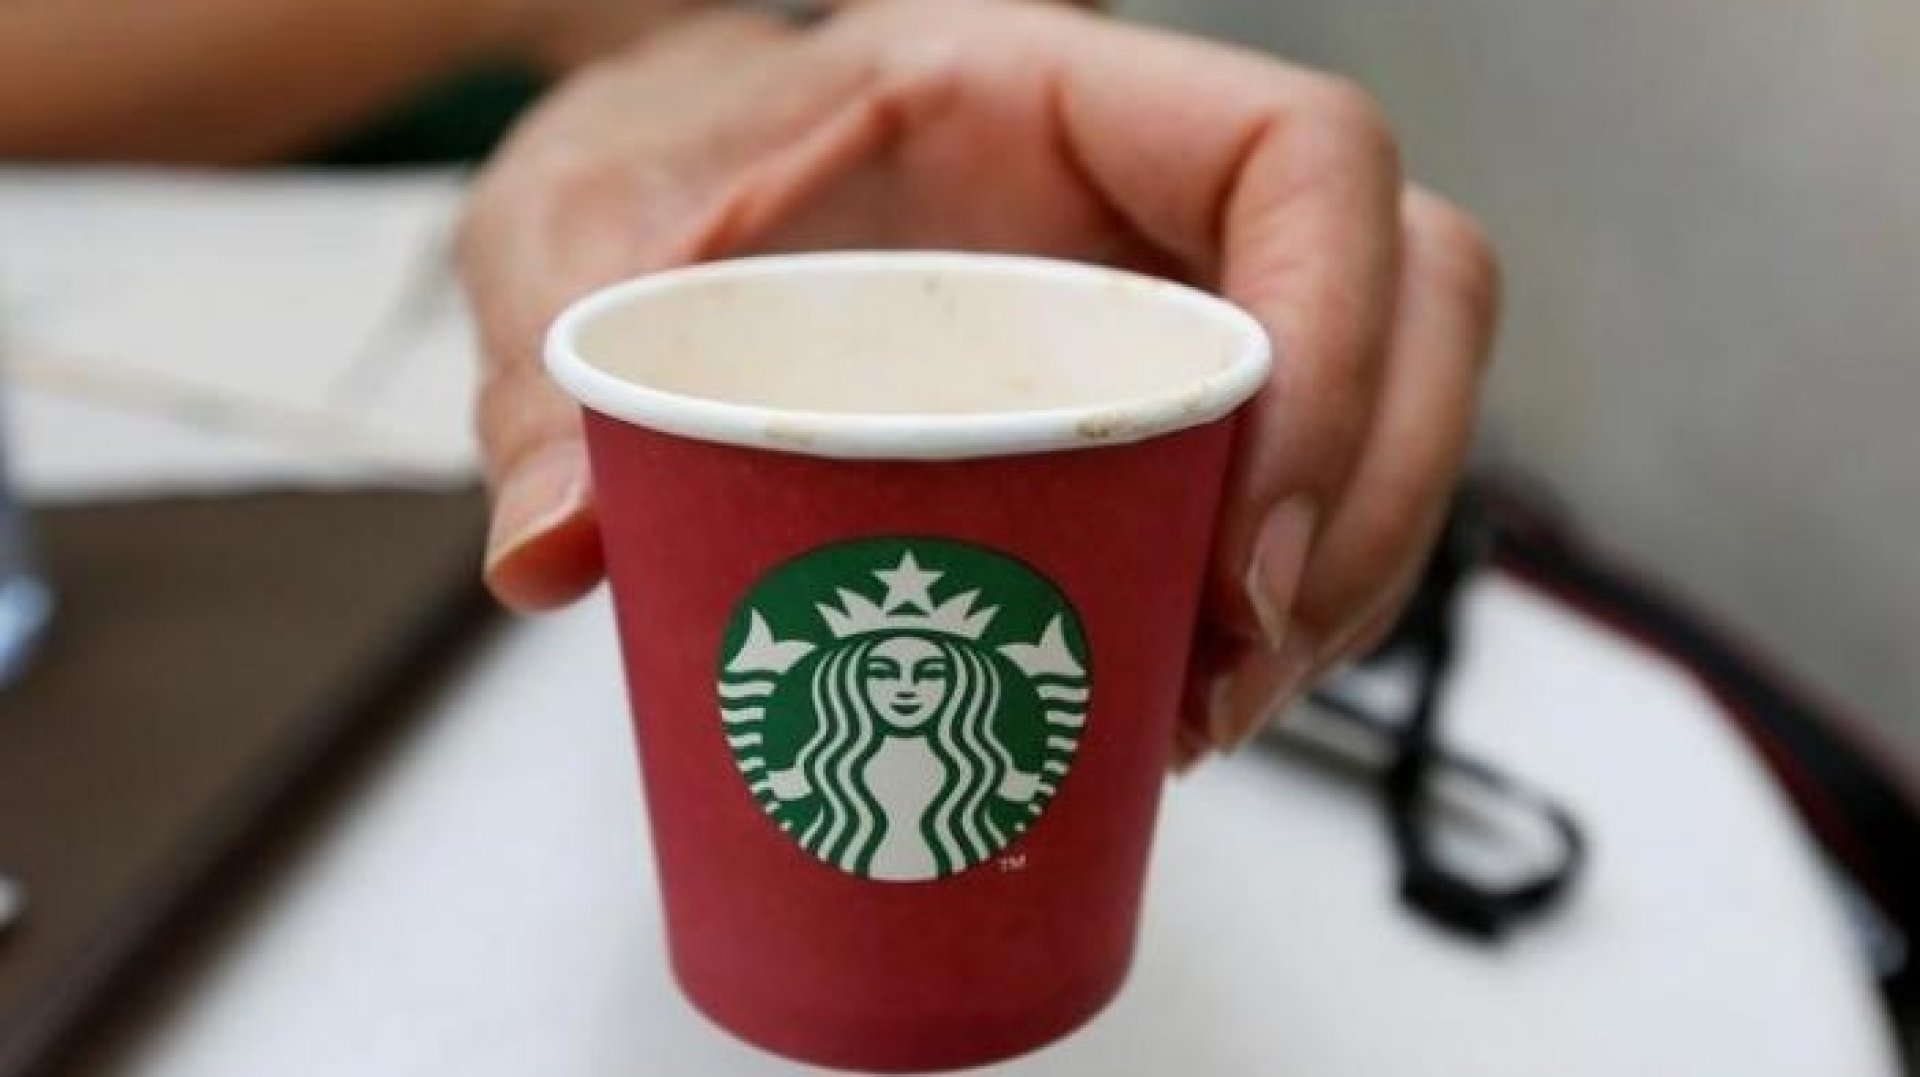 Microsoft CEO Satya Nadella joins Starbucks board of directors